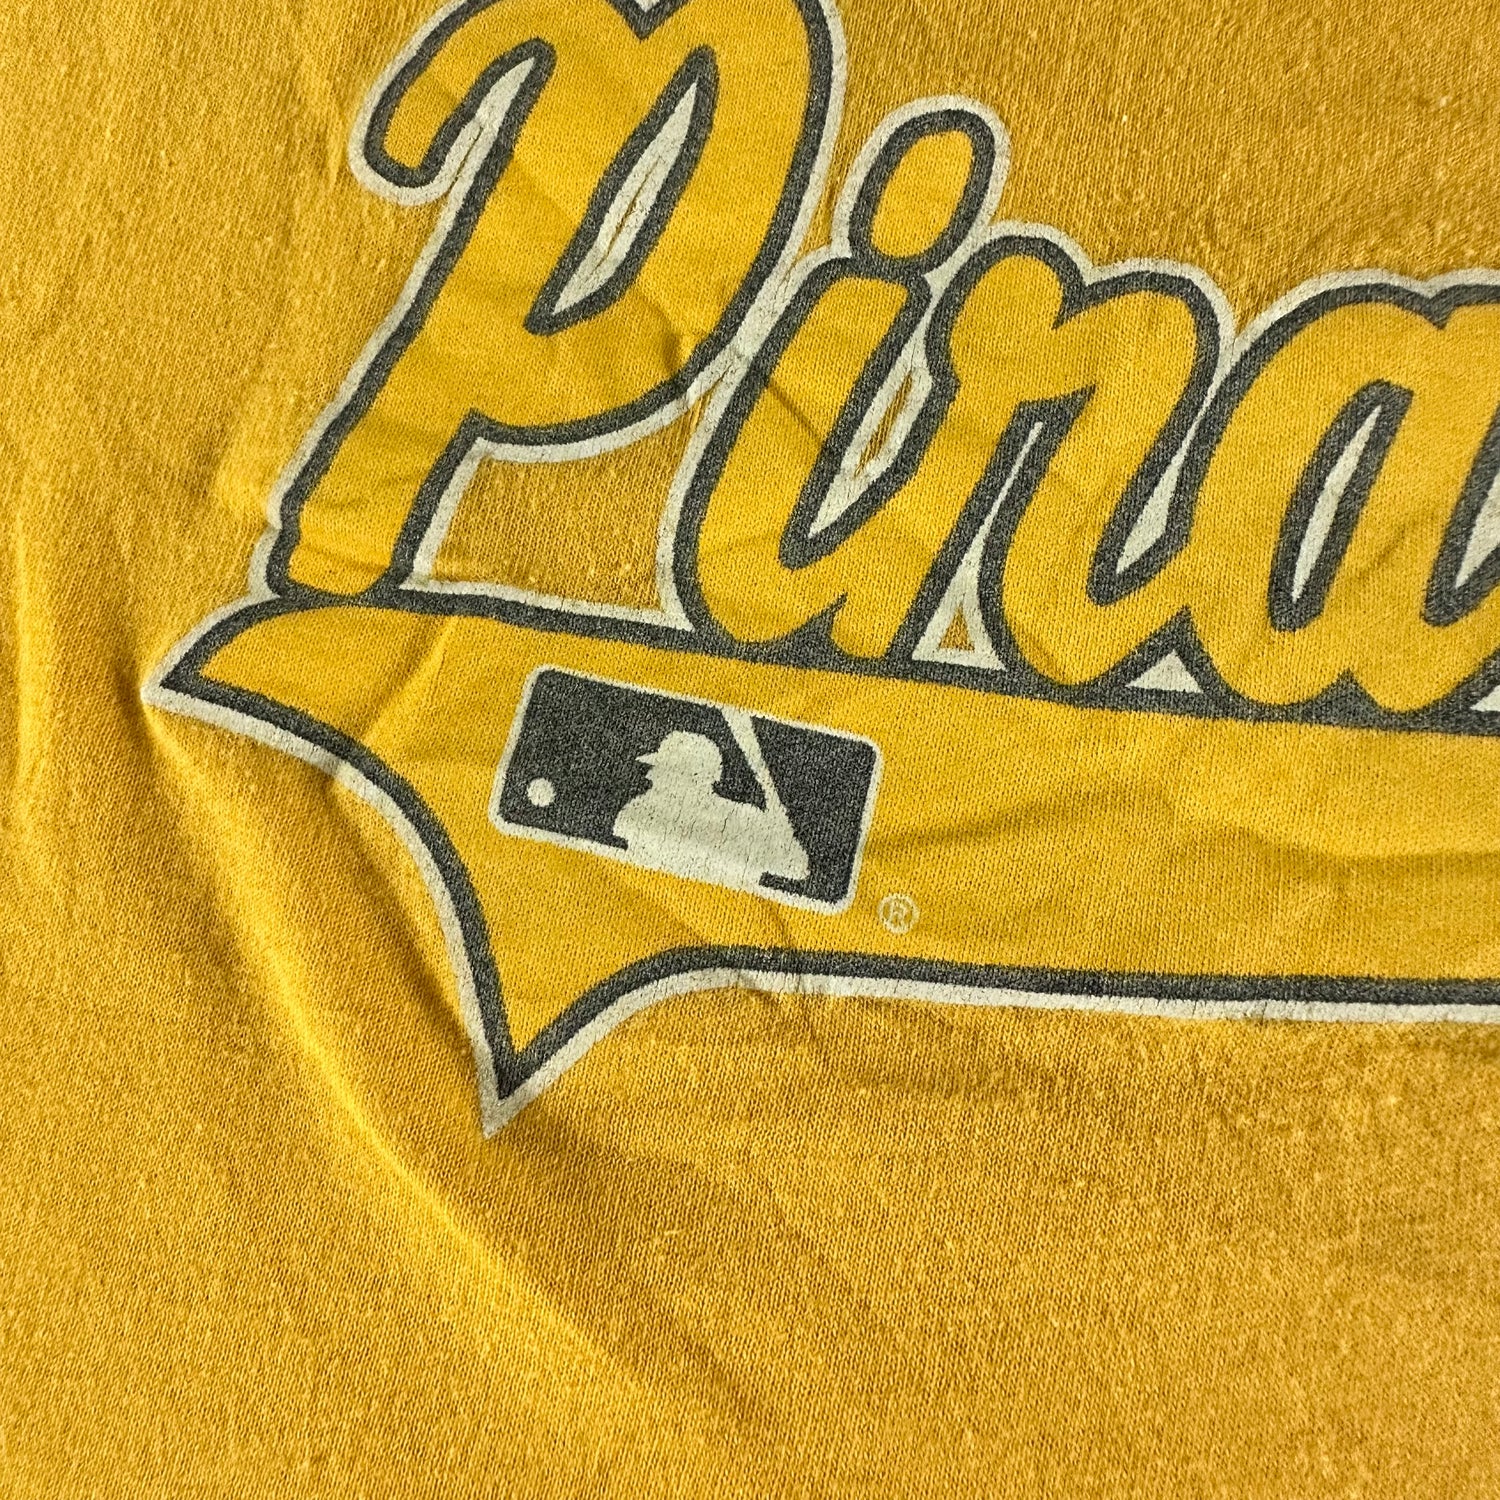 Vintage 1980s Pittsburgh Pirates T-shirt size Large